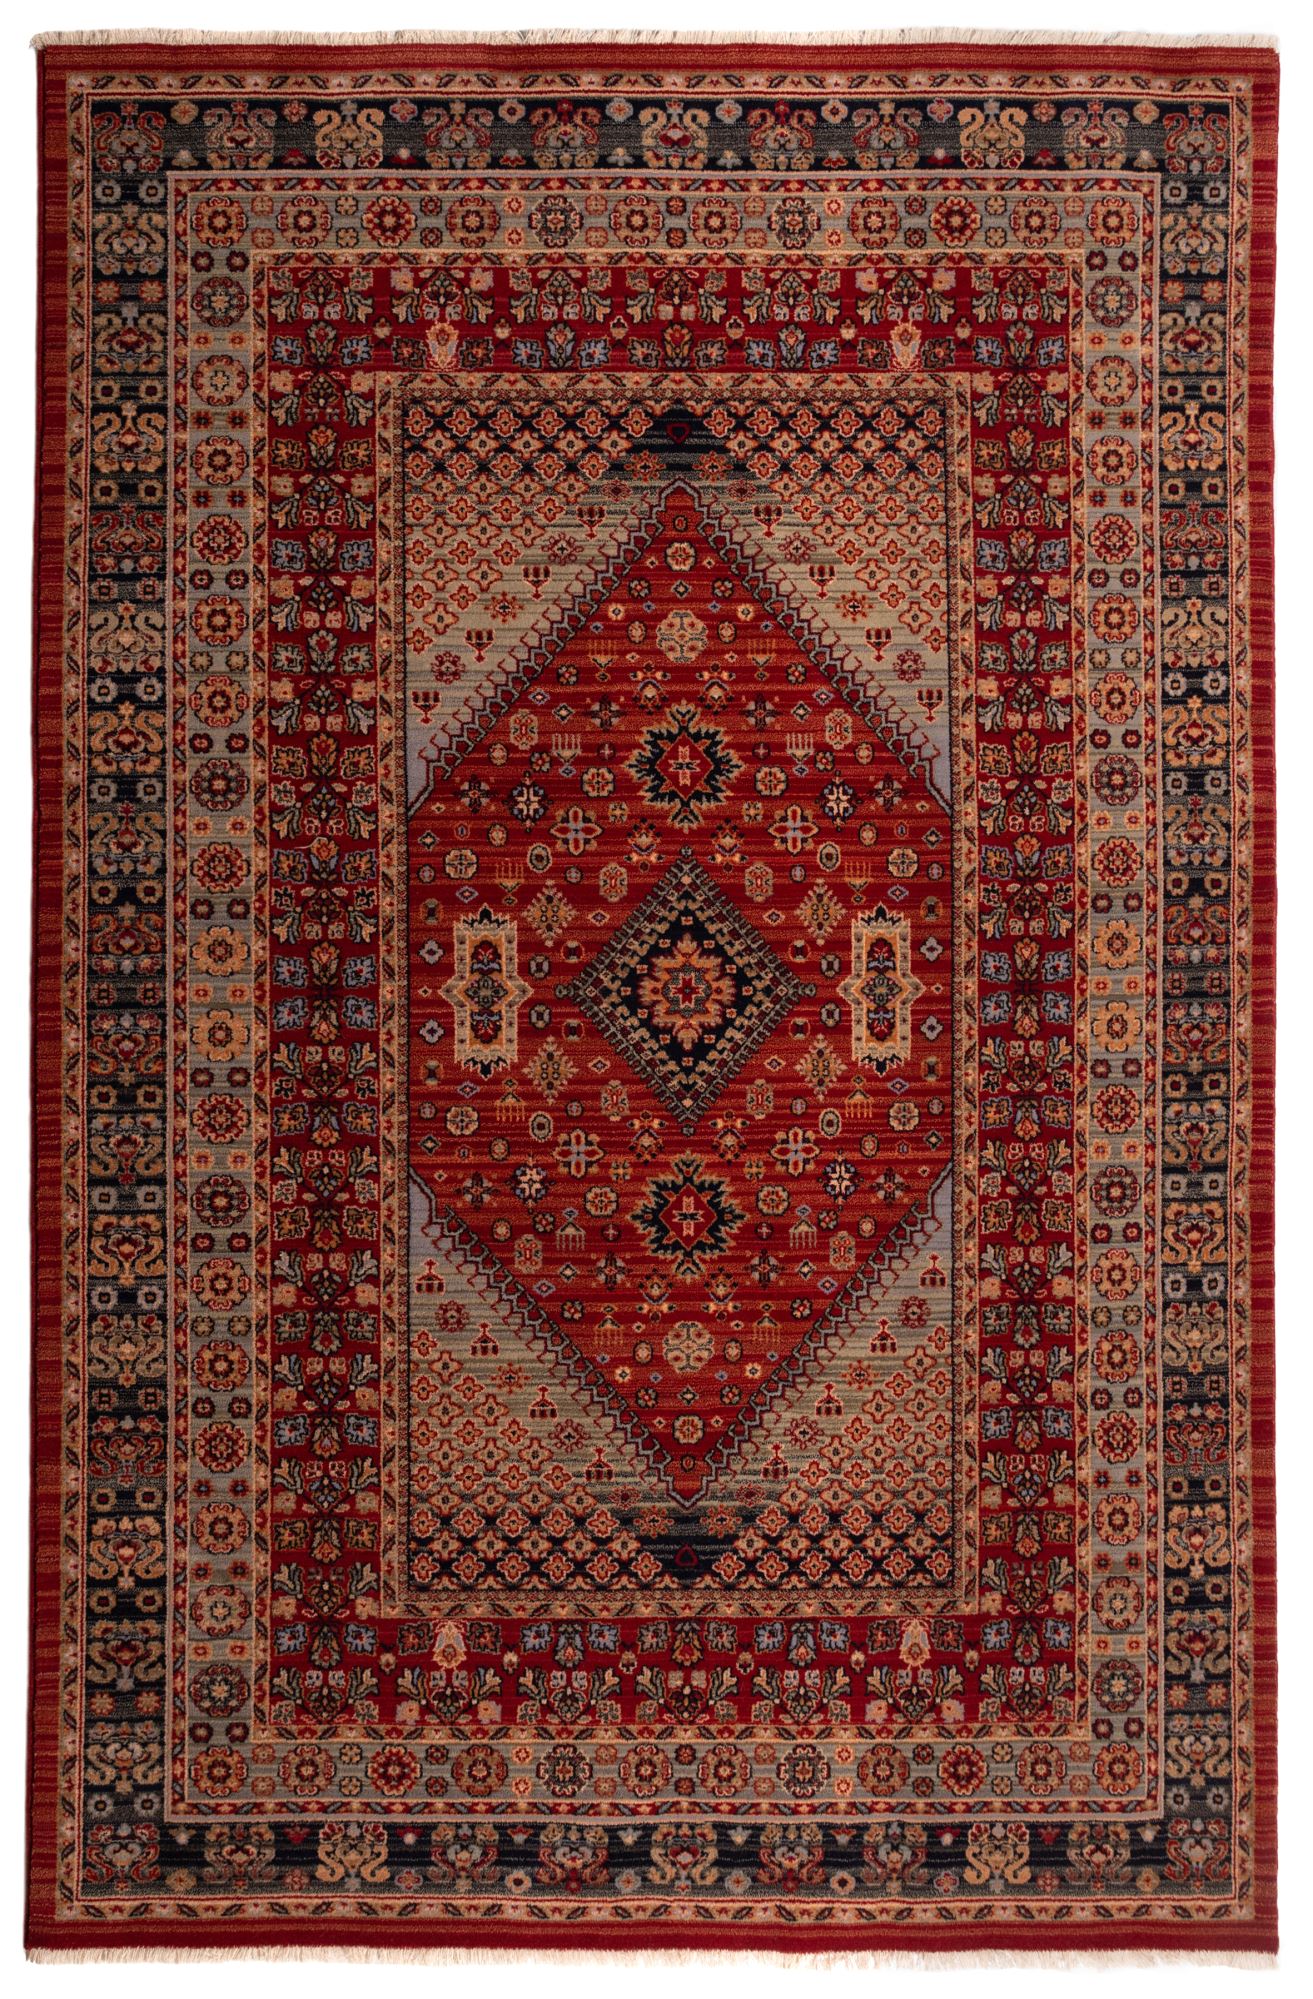 SAHARNA BIDJAR - Tapis oriental en laine rouge graphique 80x150